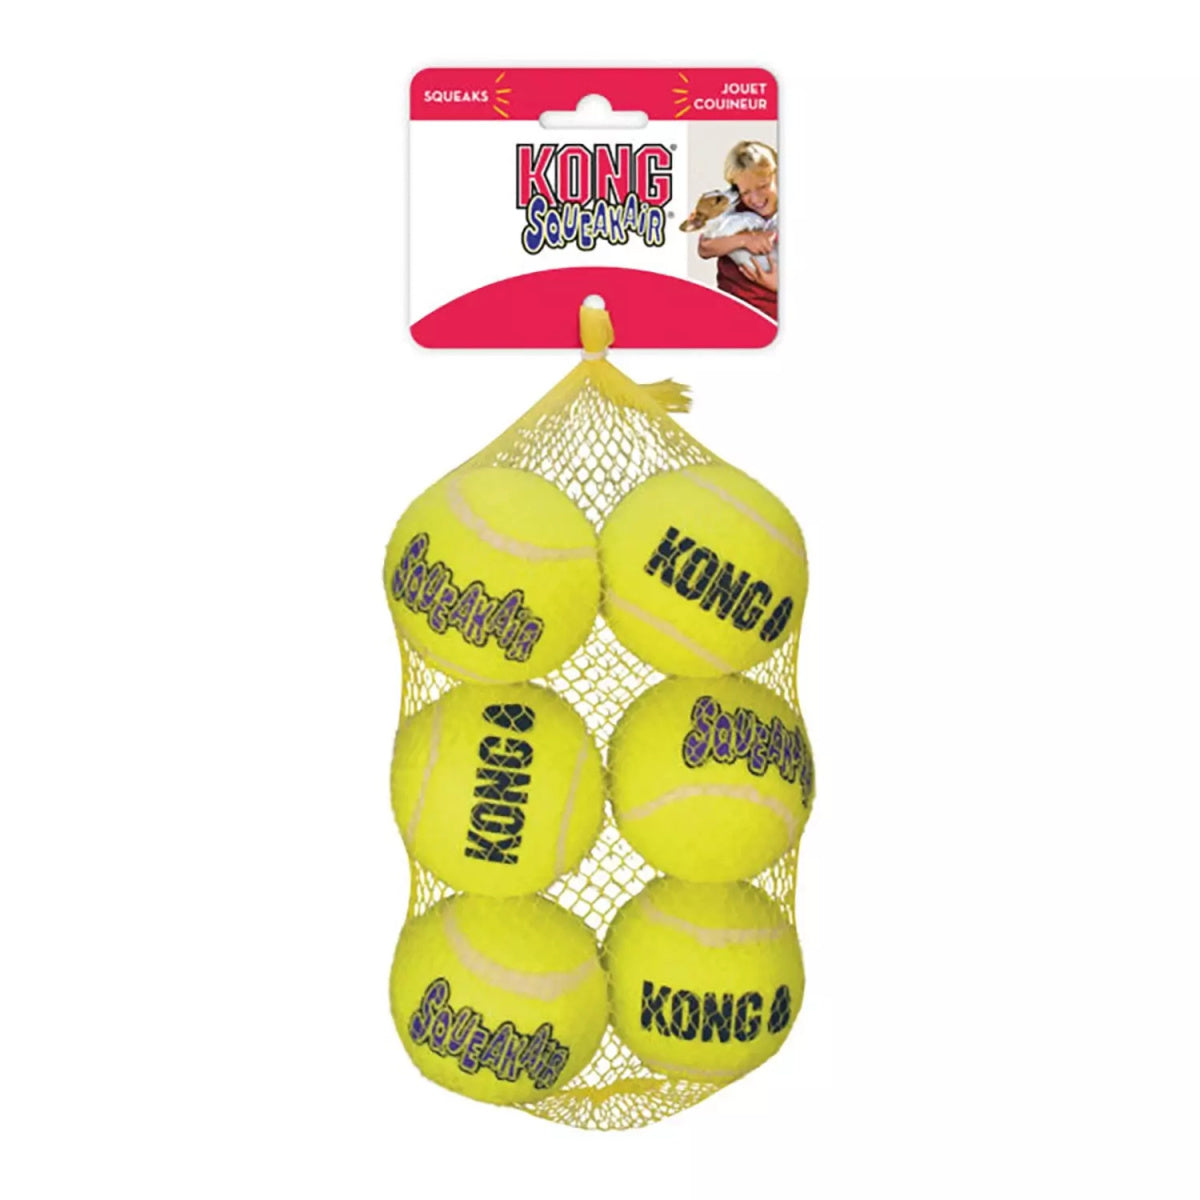 Kong Squeakair Balls 6pk - Medium